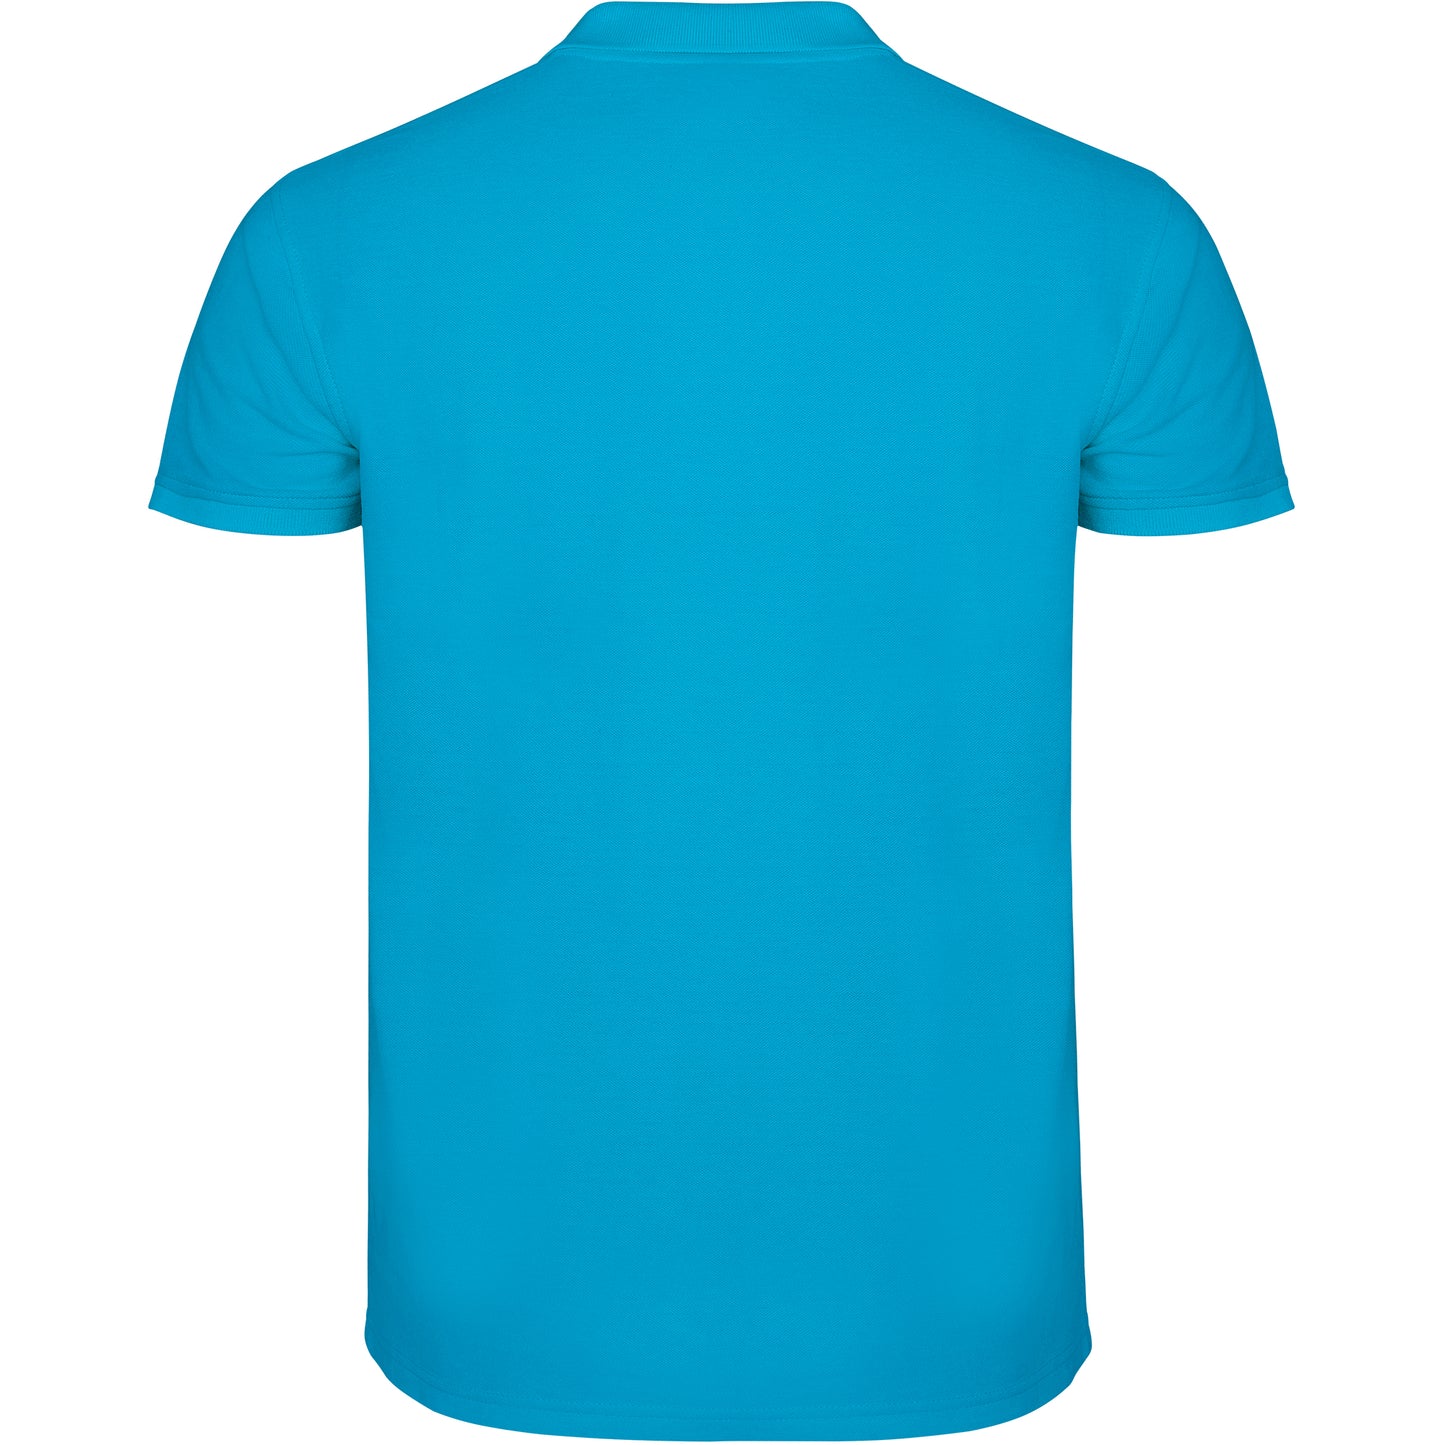 Turquoise polo shirt